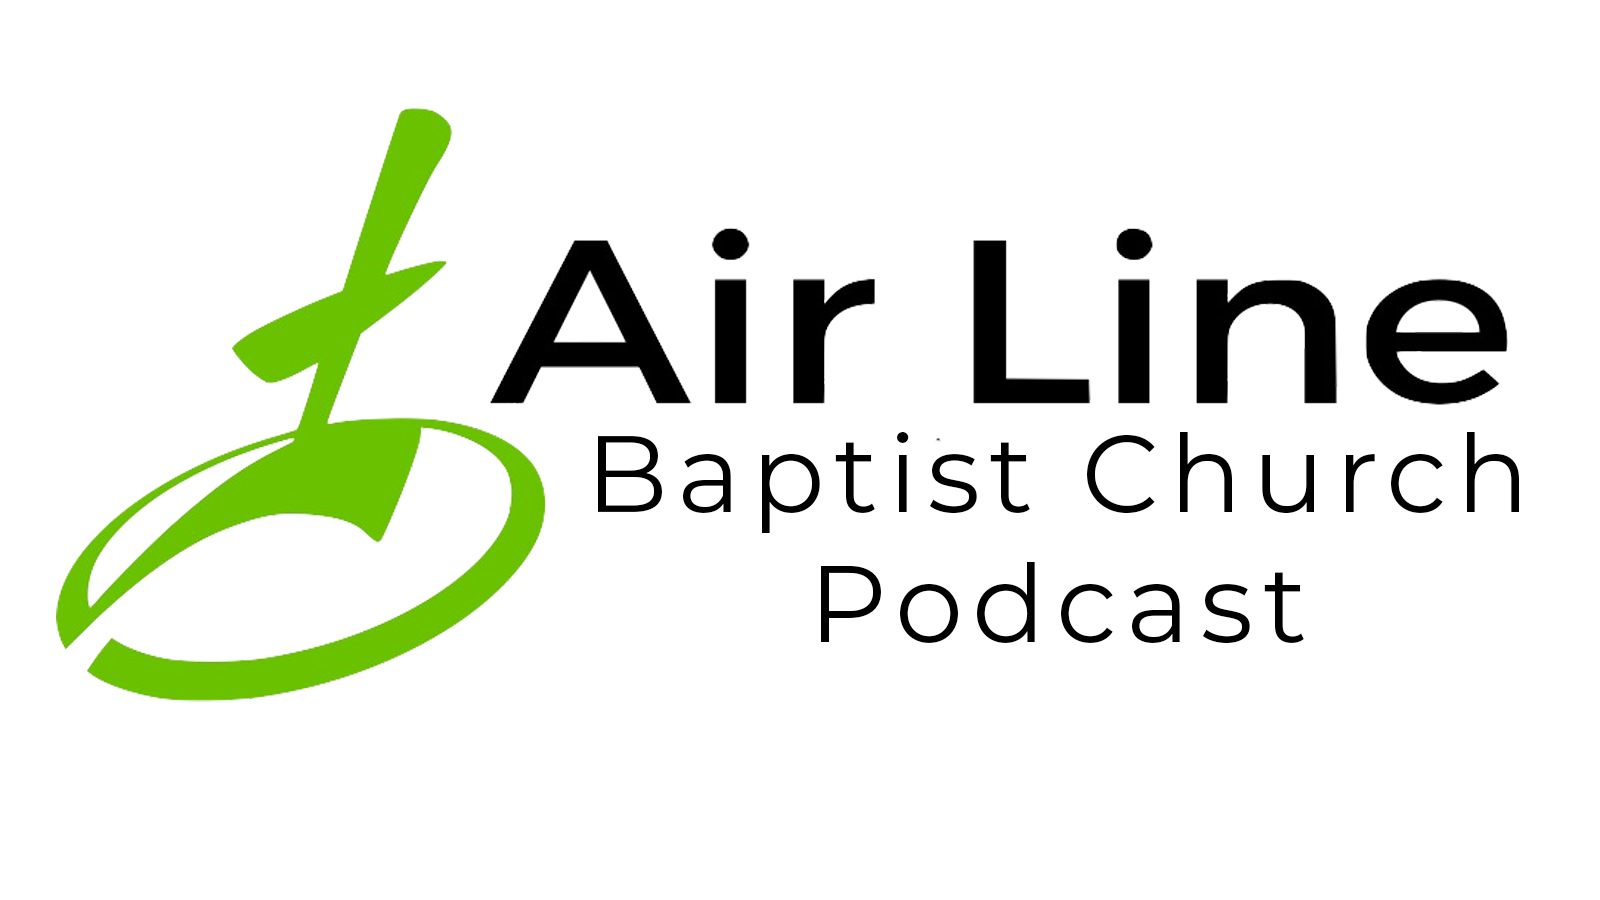 Airline Baptist Church Podcast